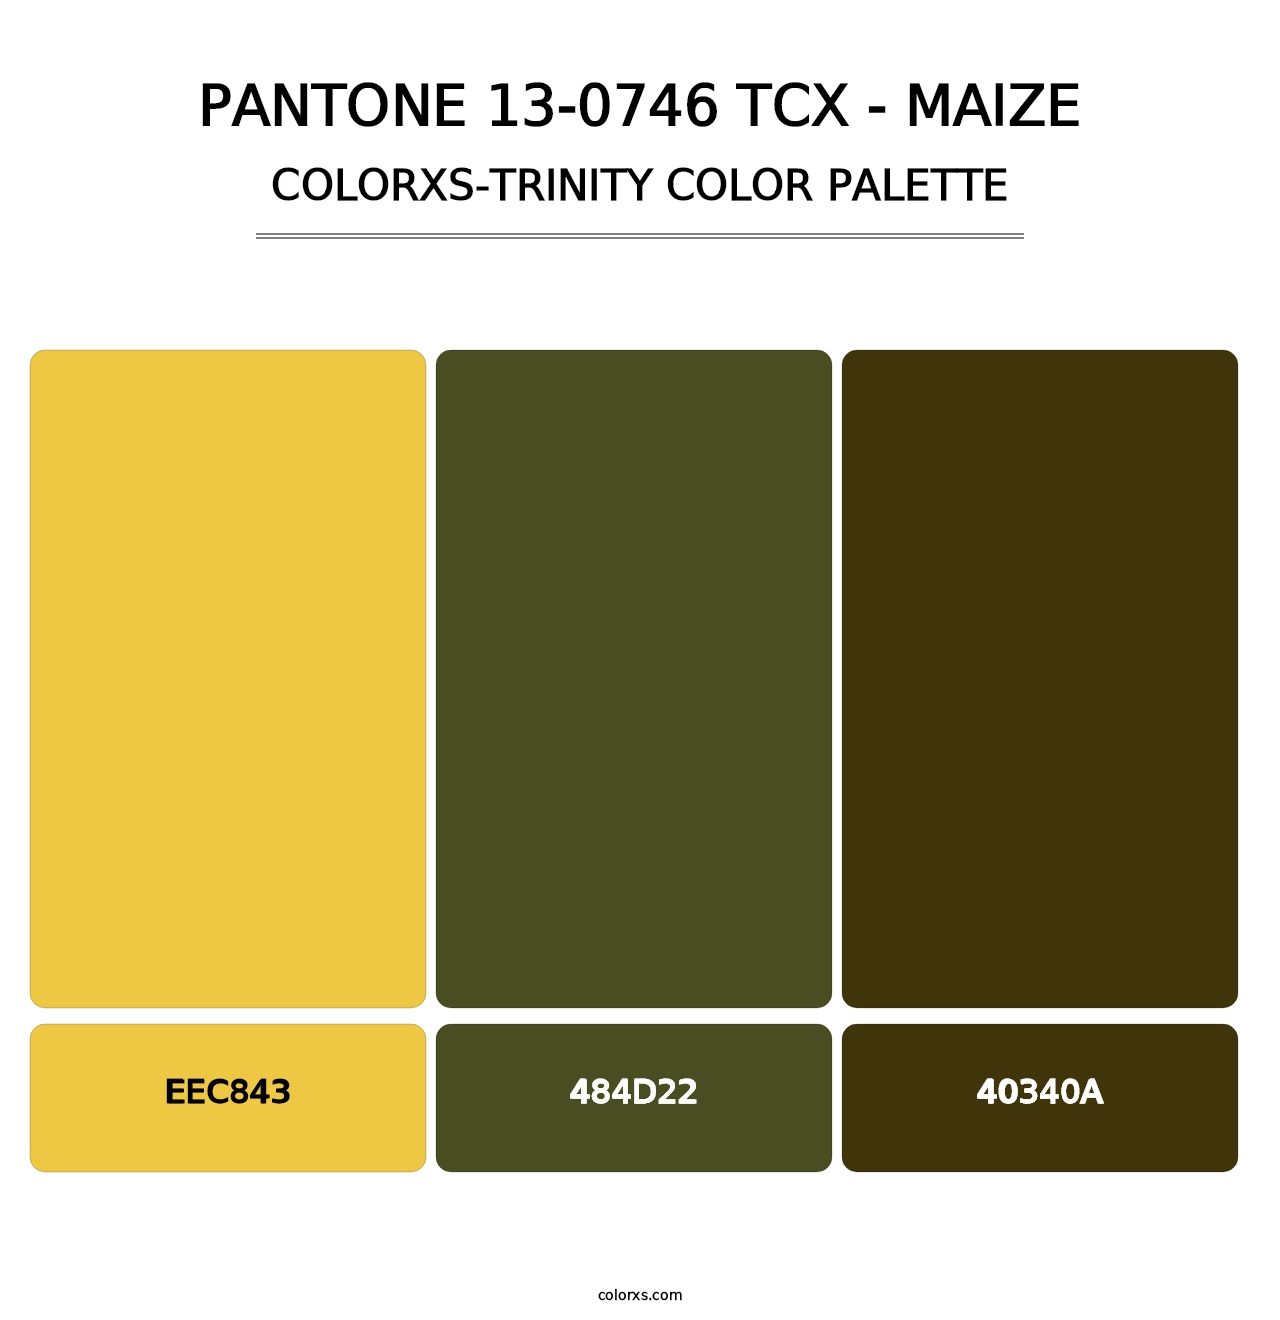 PANTONE 13-0746 TCX - Maize - Colorxs Trinity Palette